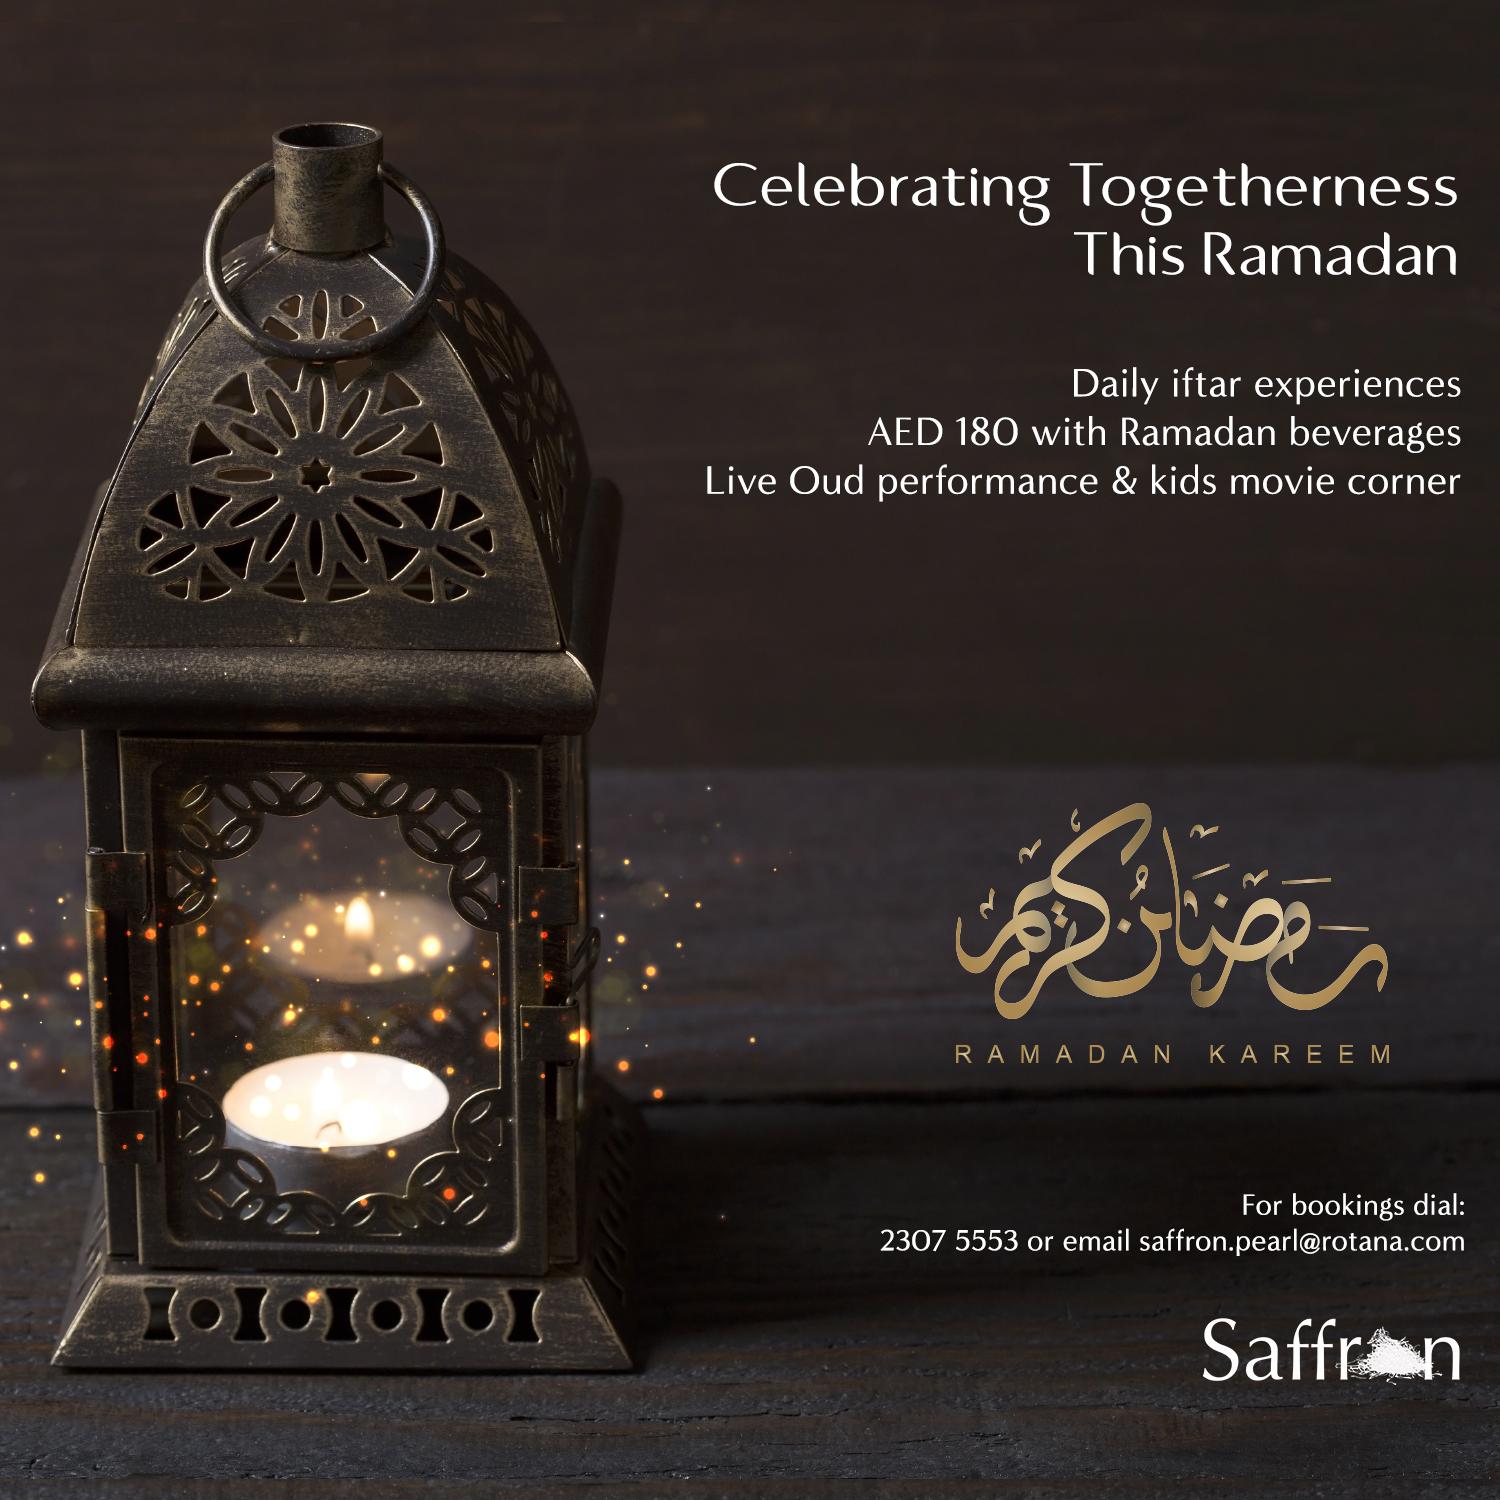 Celebrating Togetherness This Ramadan at Saffron